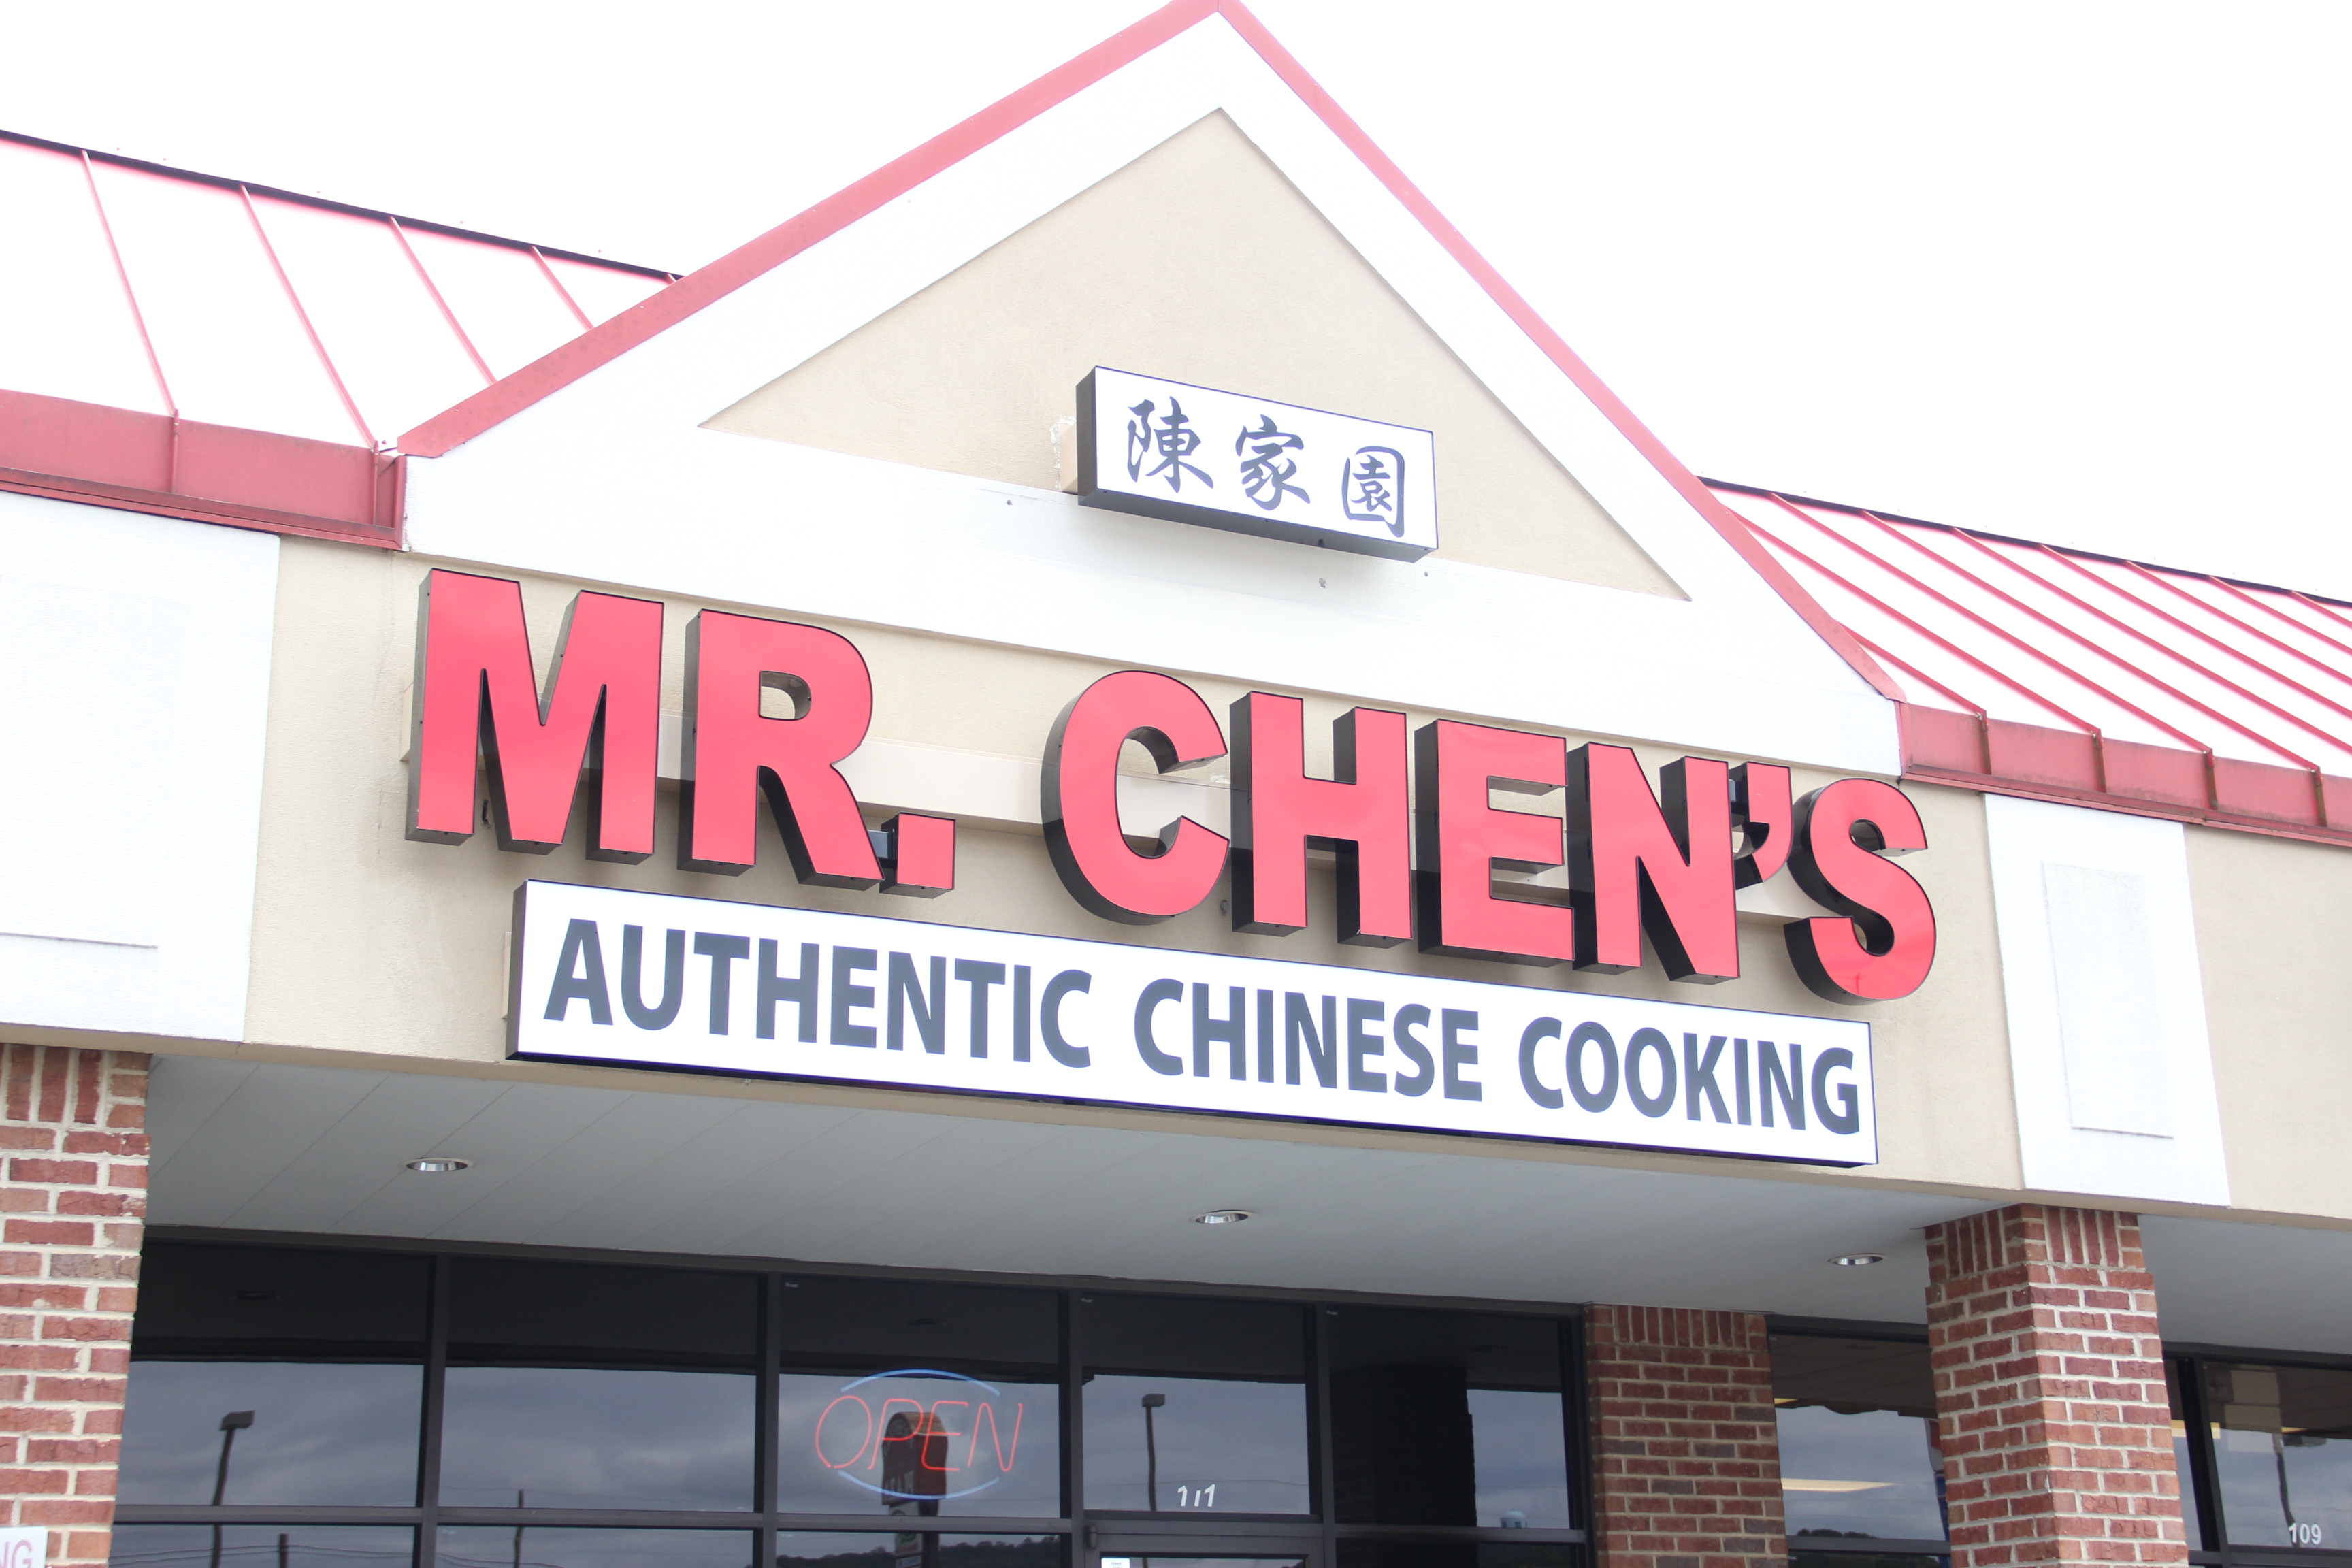 Mr. Chen’s opens in Trussville